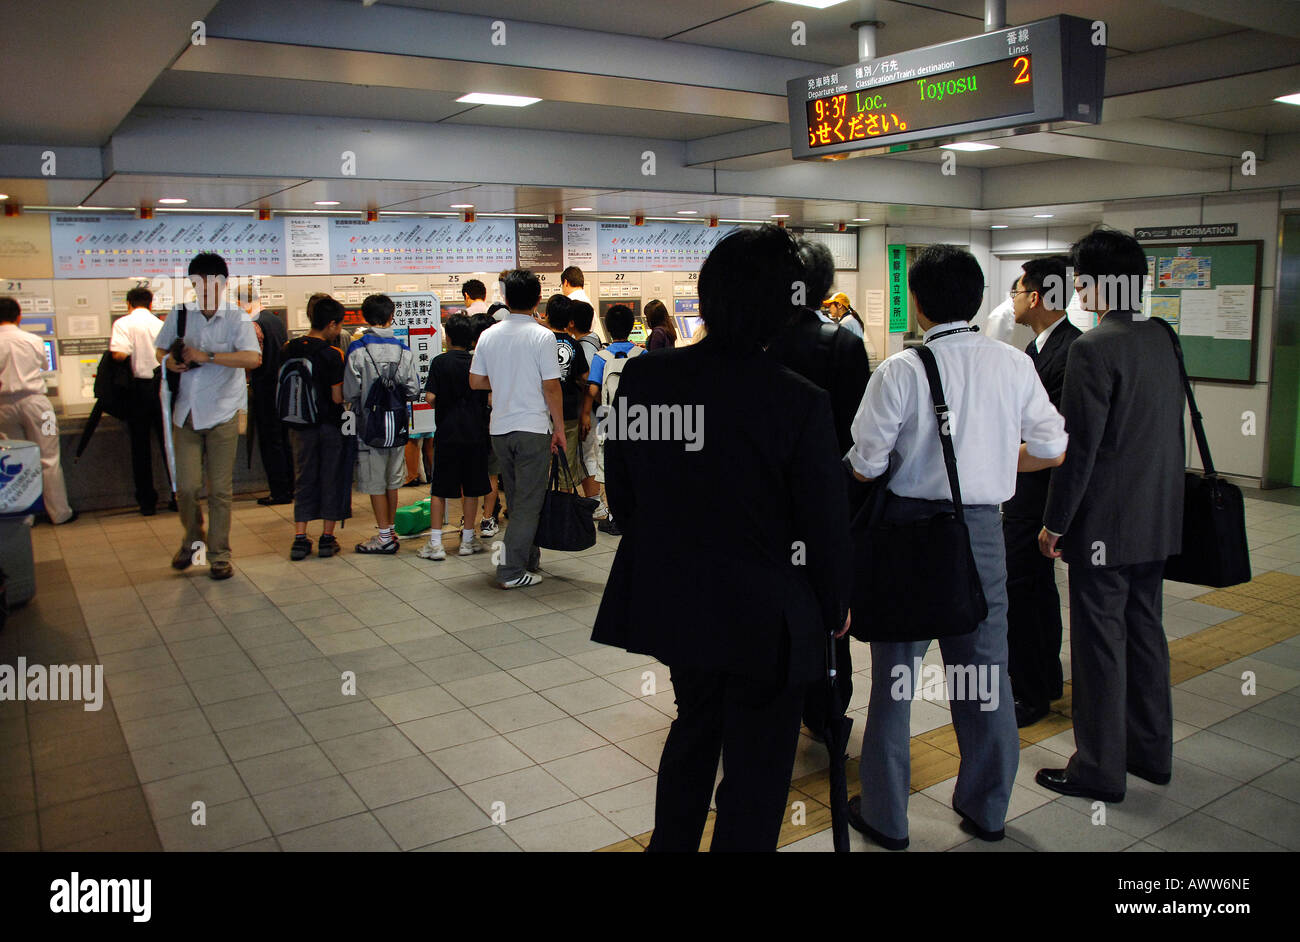 Ticket office at Toyosu station Yurikamome Line, Tokyo Japan Stock Photo